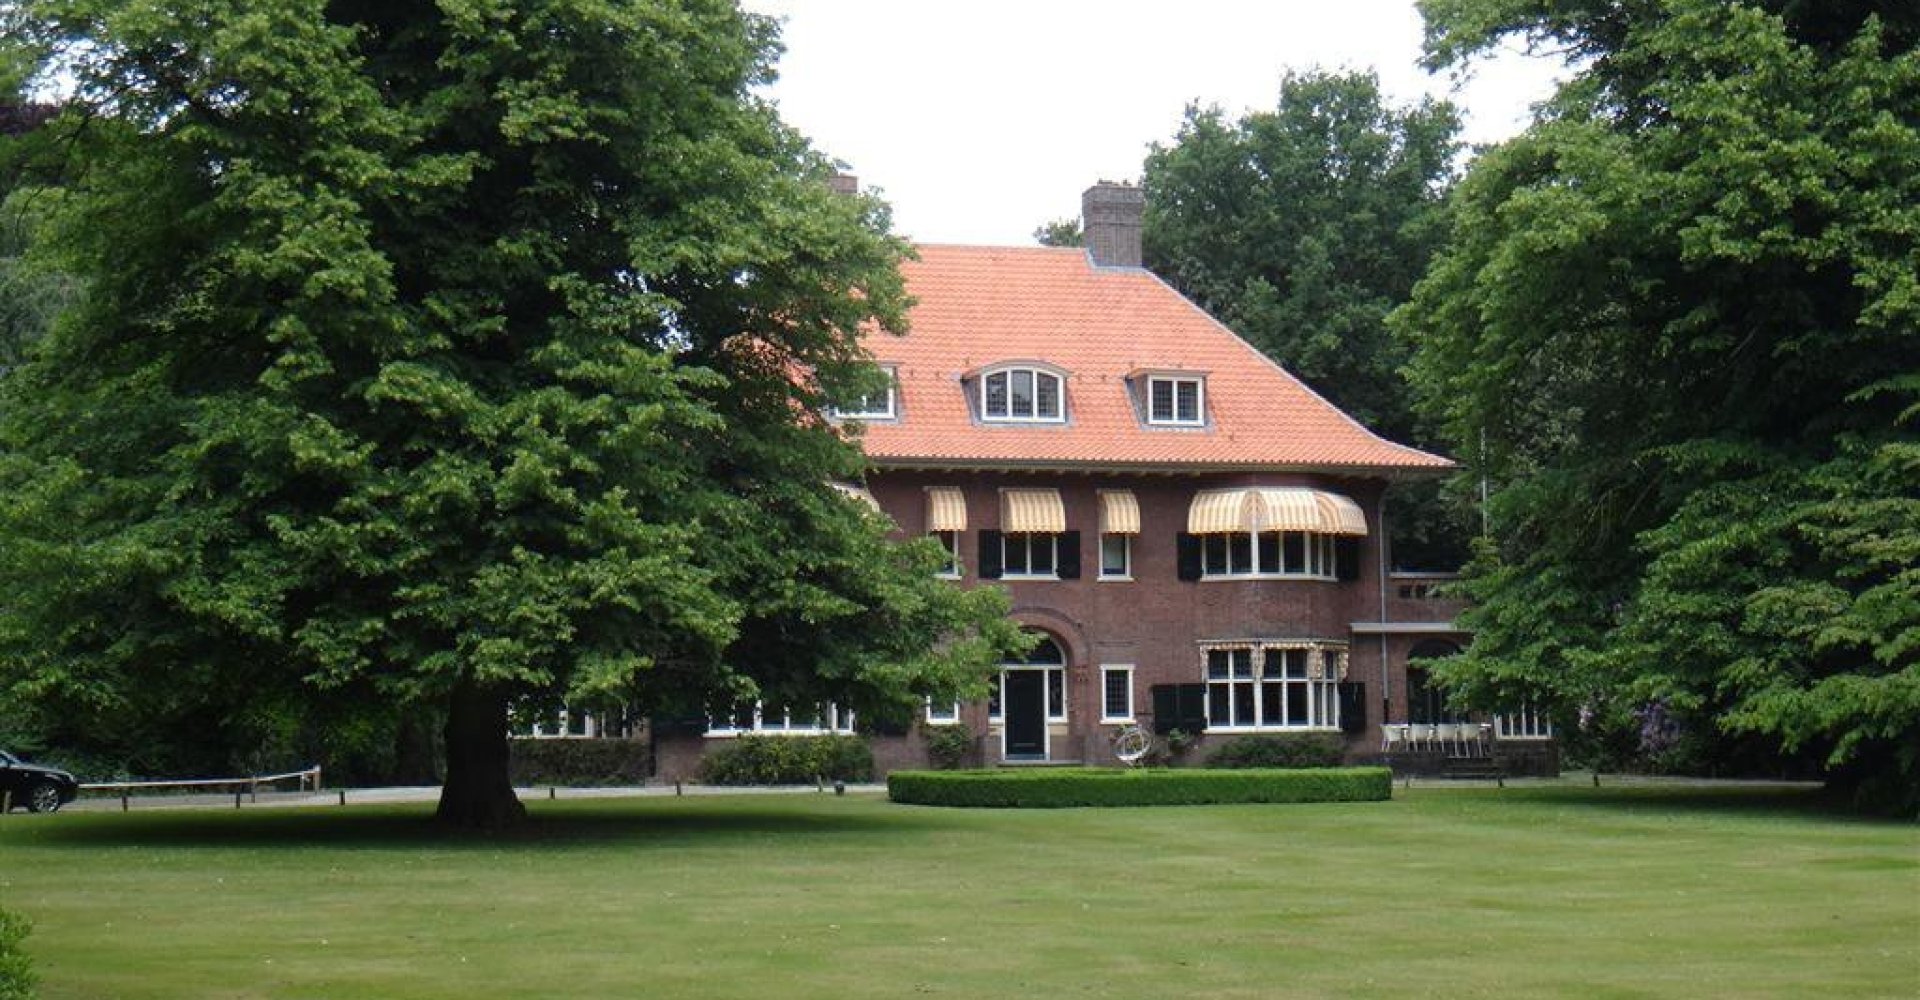 PERSBERICHT: KRAGT koopt rijksmonument villa Mariënhof in Tilburg